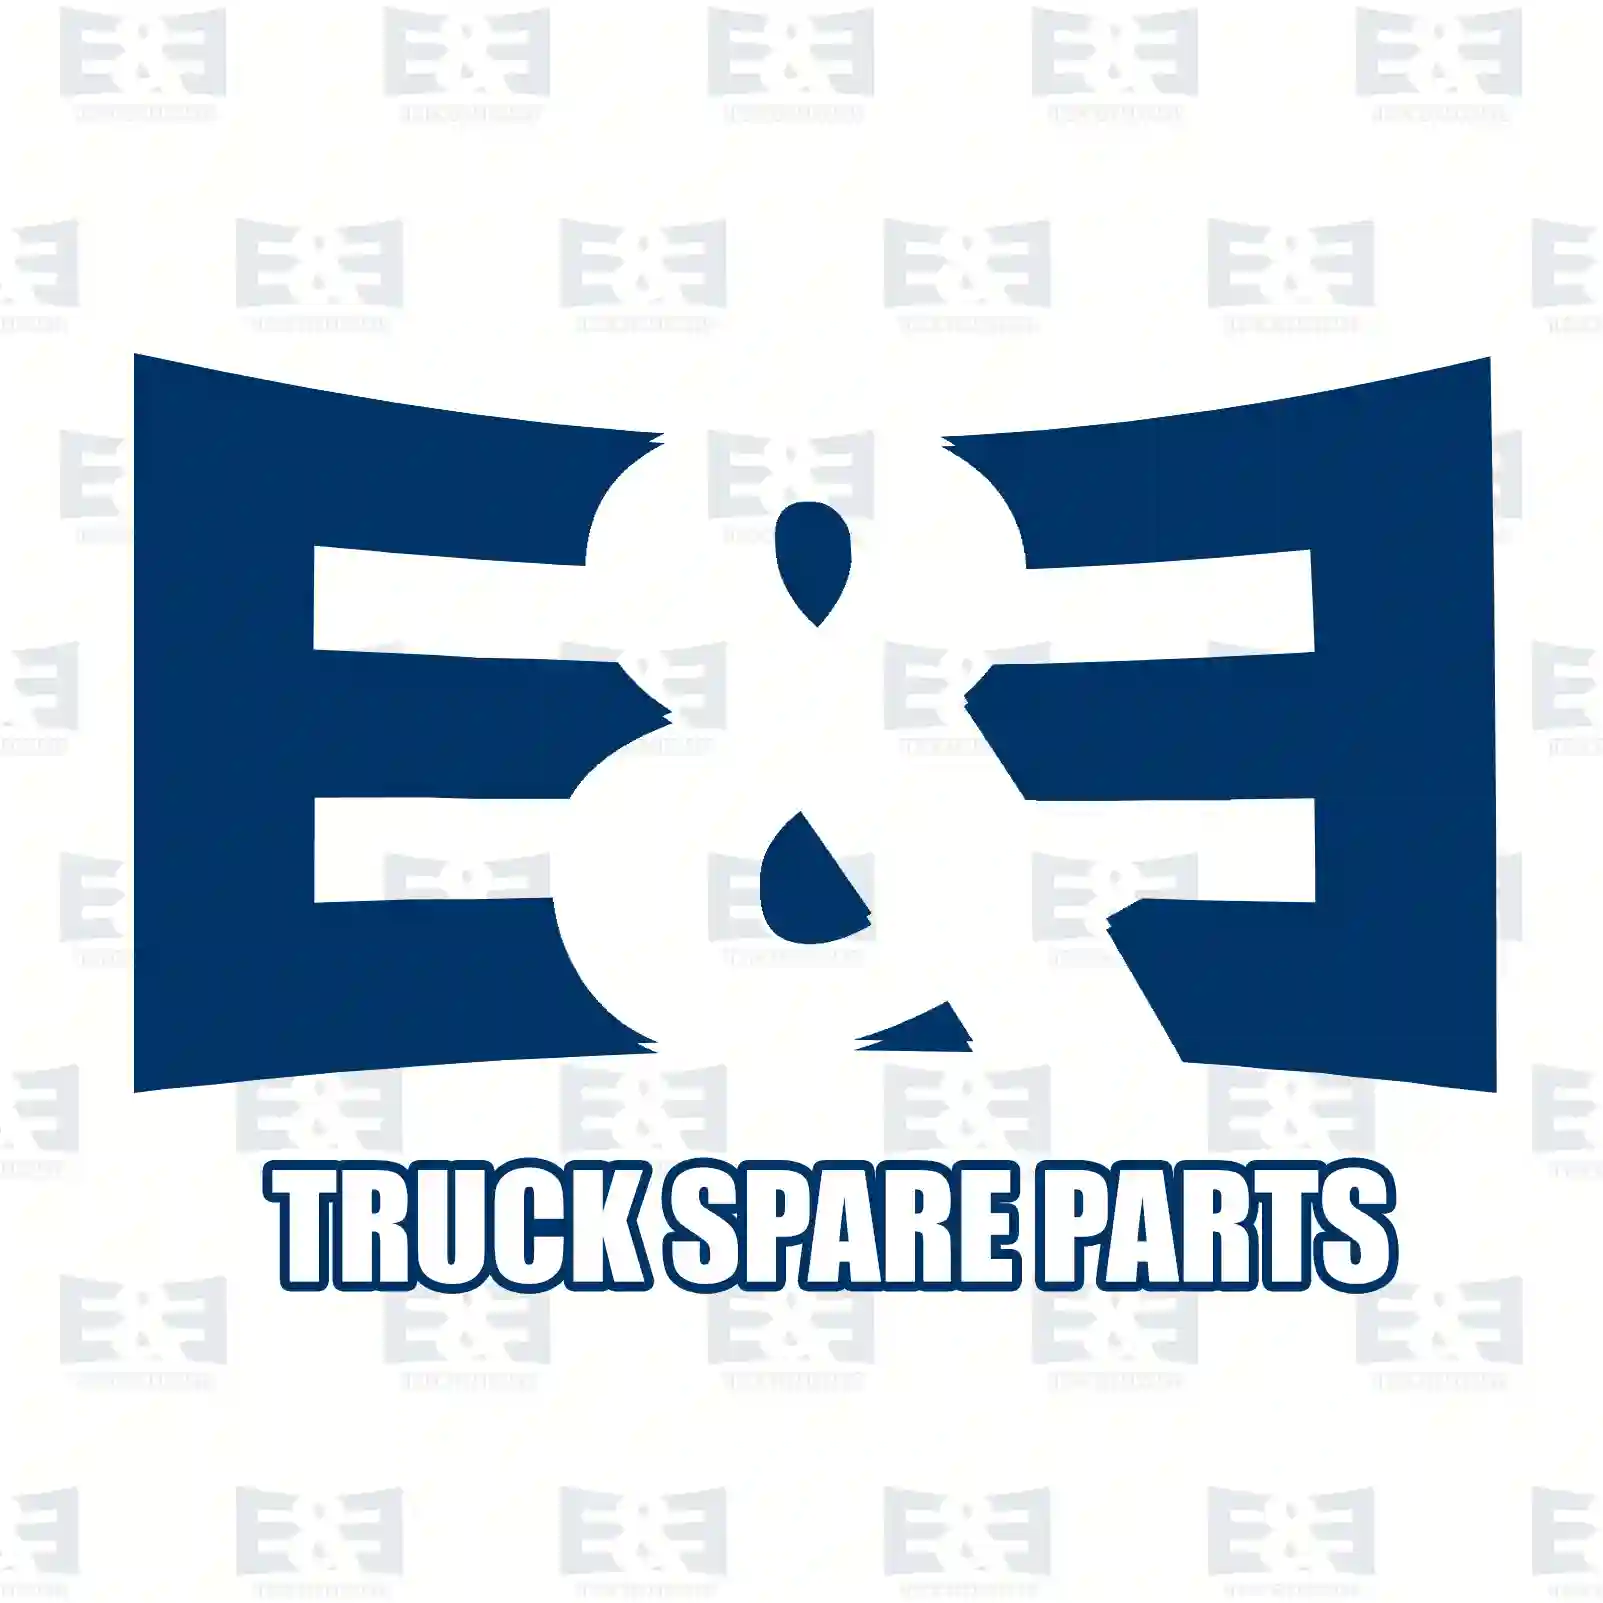 Clutch cylinder, 2E2288894, 7421564396, 21232945, 21564394 ||  2E2288894 E&E Truck Spare Parts | Truck Spare Parts, Auotomotive Spare Parts Clutch cylinder, 2E2288894, 7421564396, 21232945, 21564394 ||  2E2288894 E&E Truck Spare Parts | Truck Spare Parts, Auotomotive Spare Parts